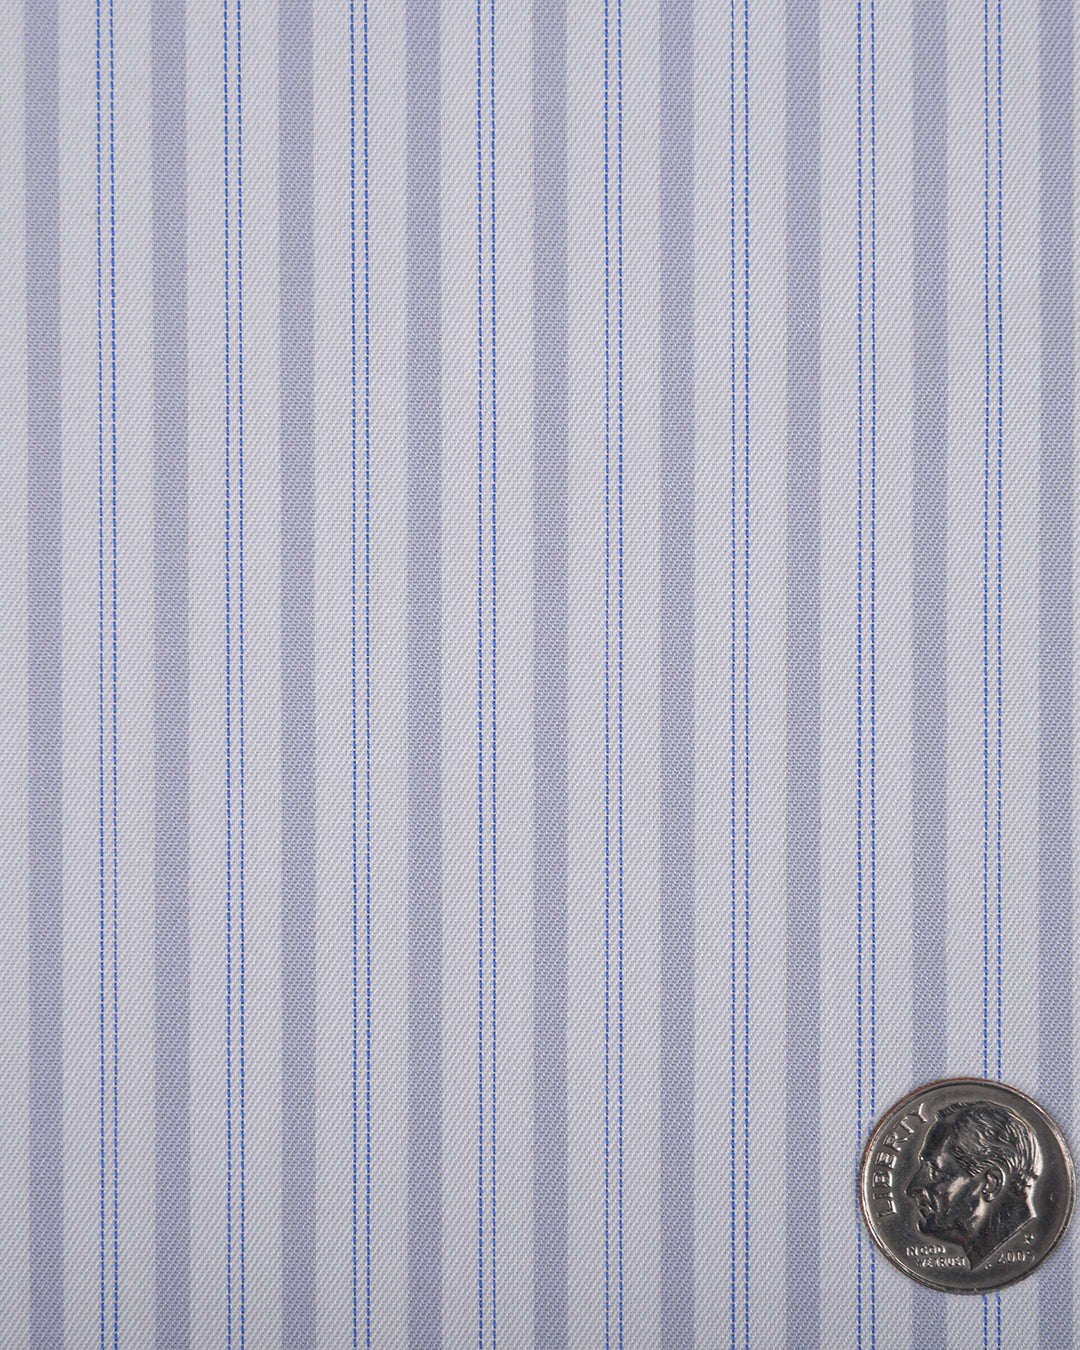 Alumo Grey and Blue Alternate Stripes